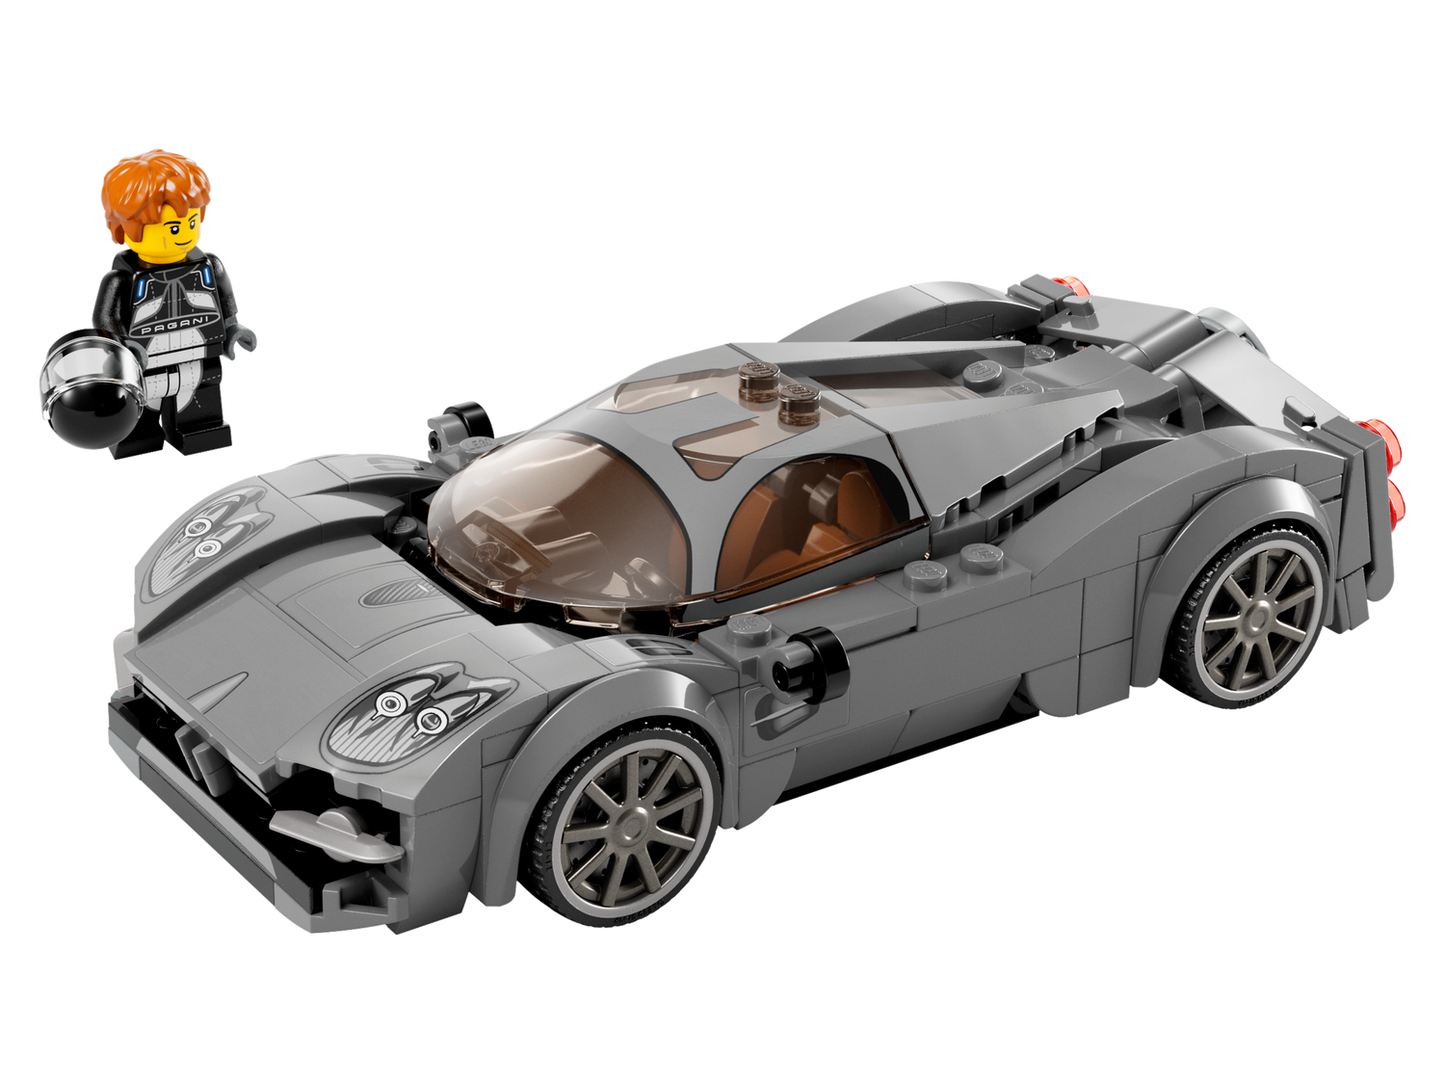 76915 LEGO Speed Champions - Pagani Utopia